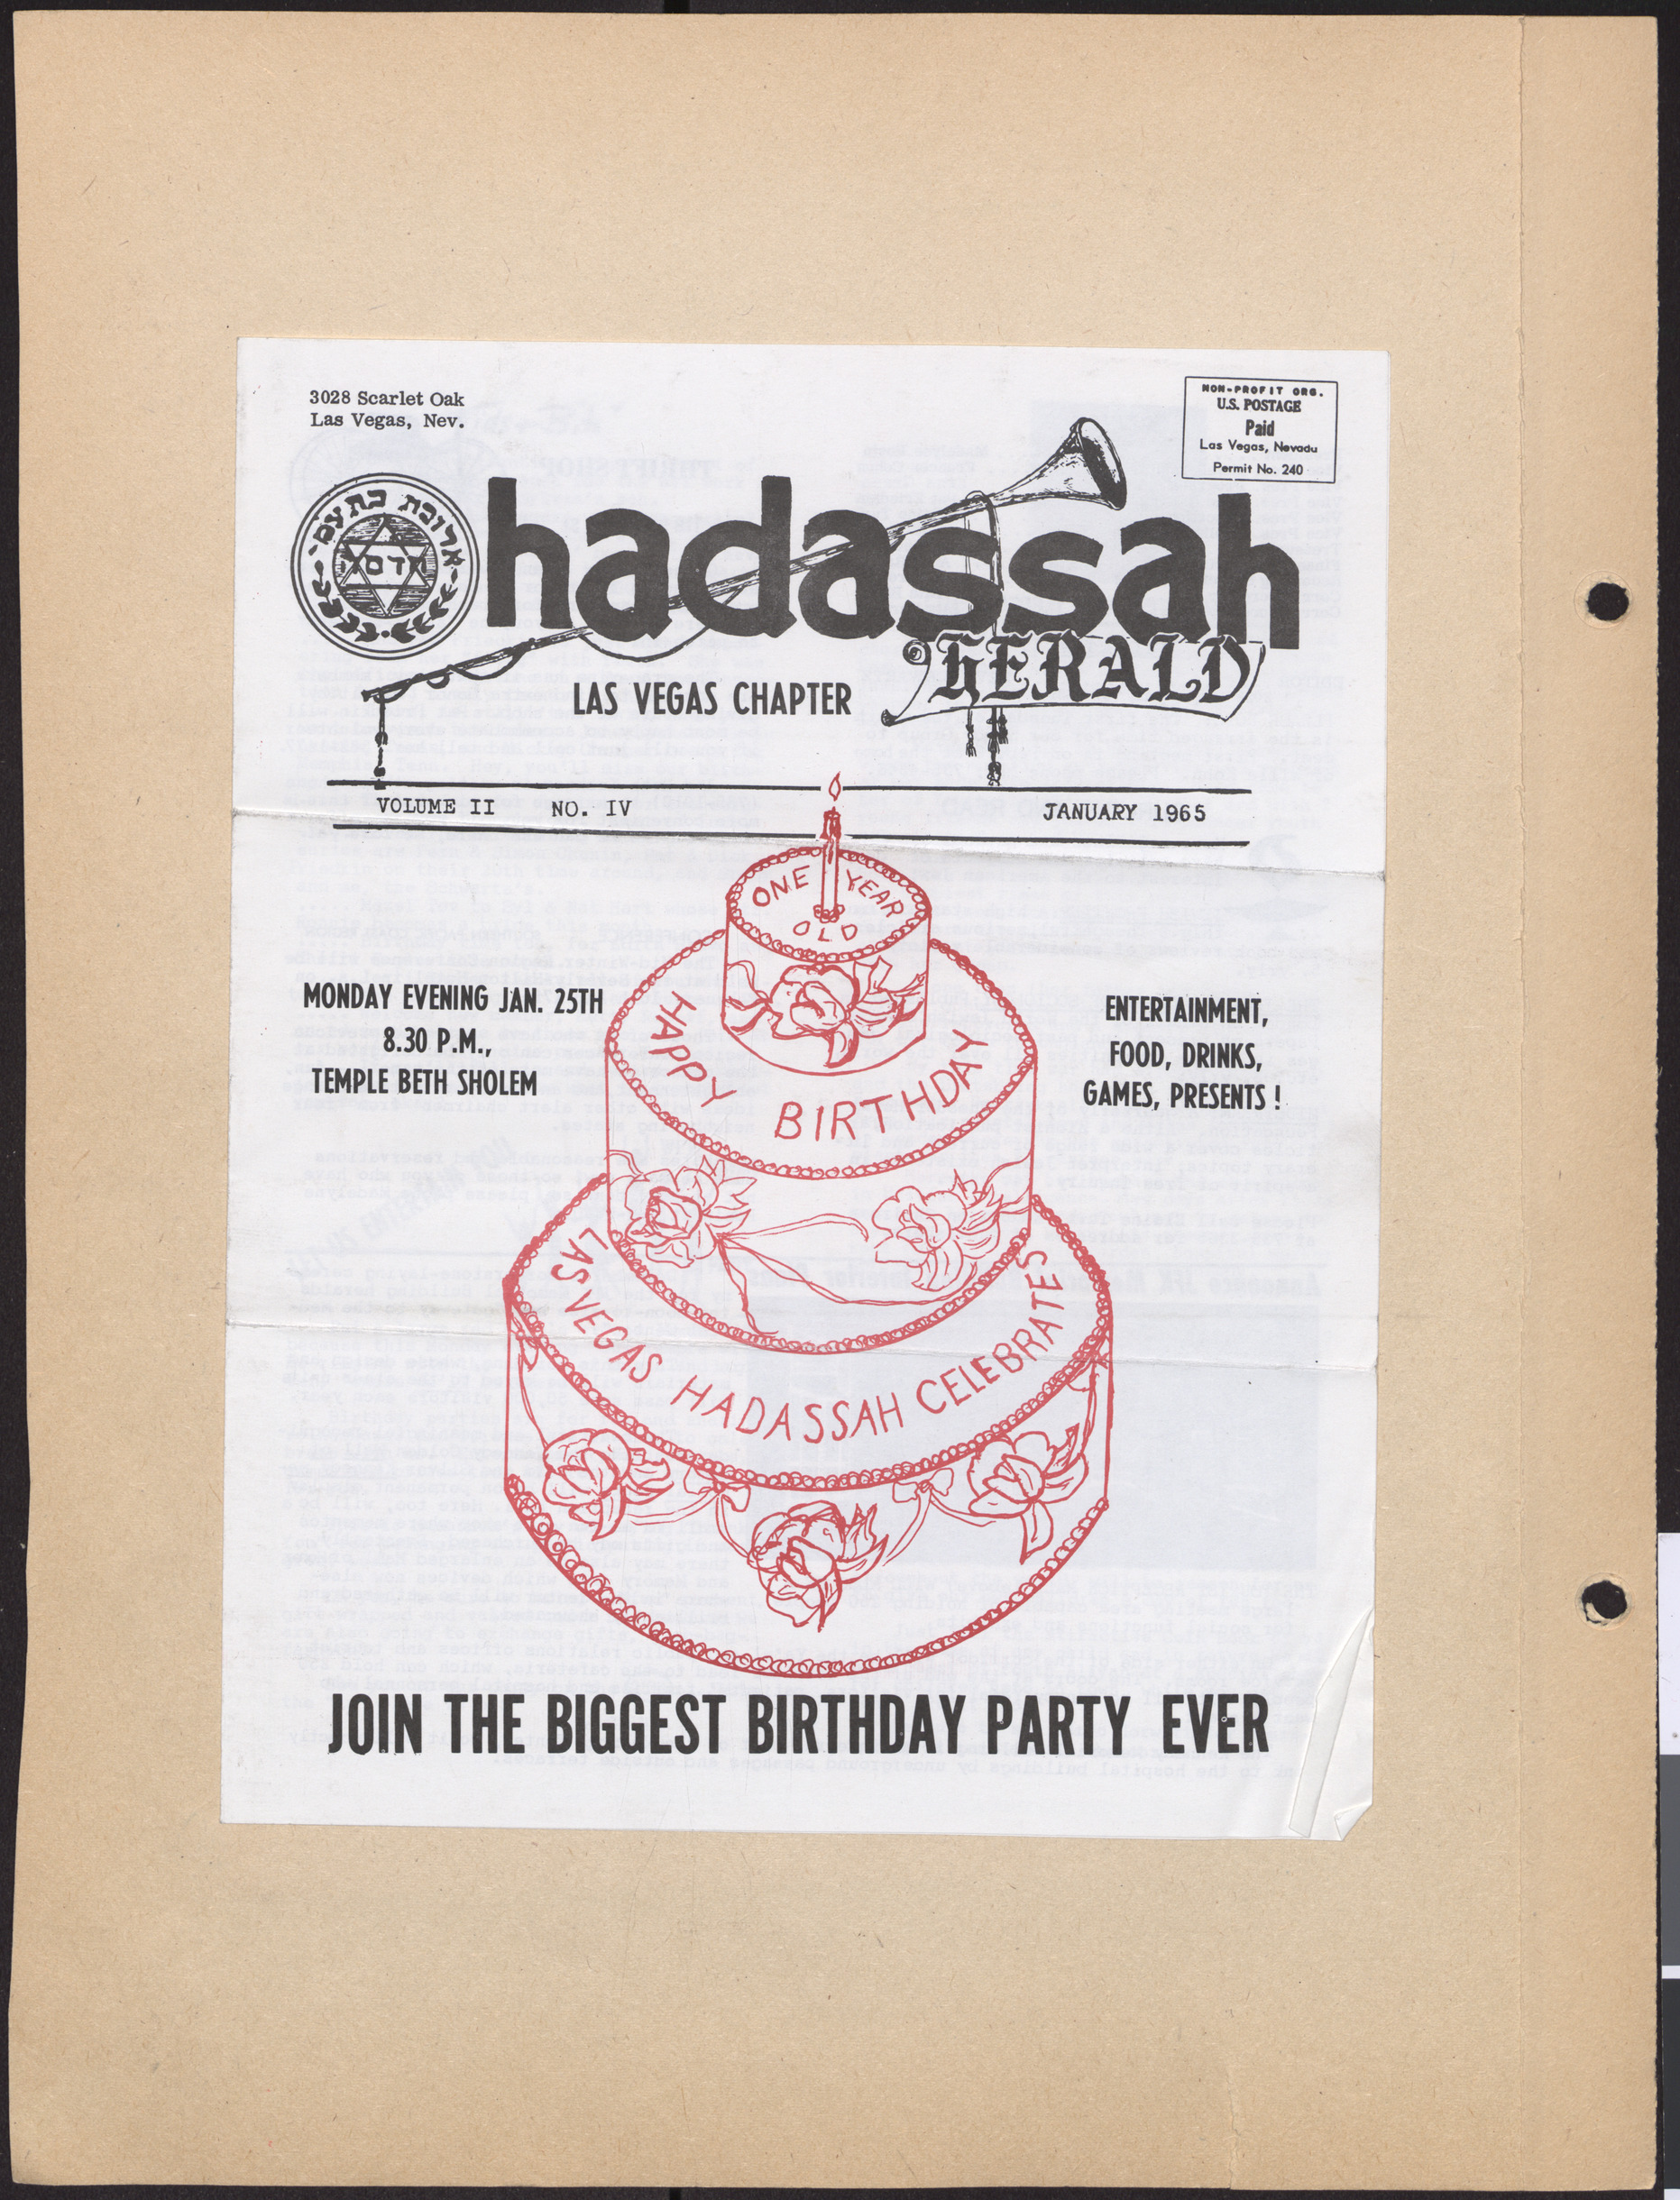 Hadassah Las Vegas Chapter newsletter, January 1965, cover